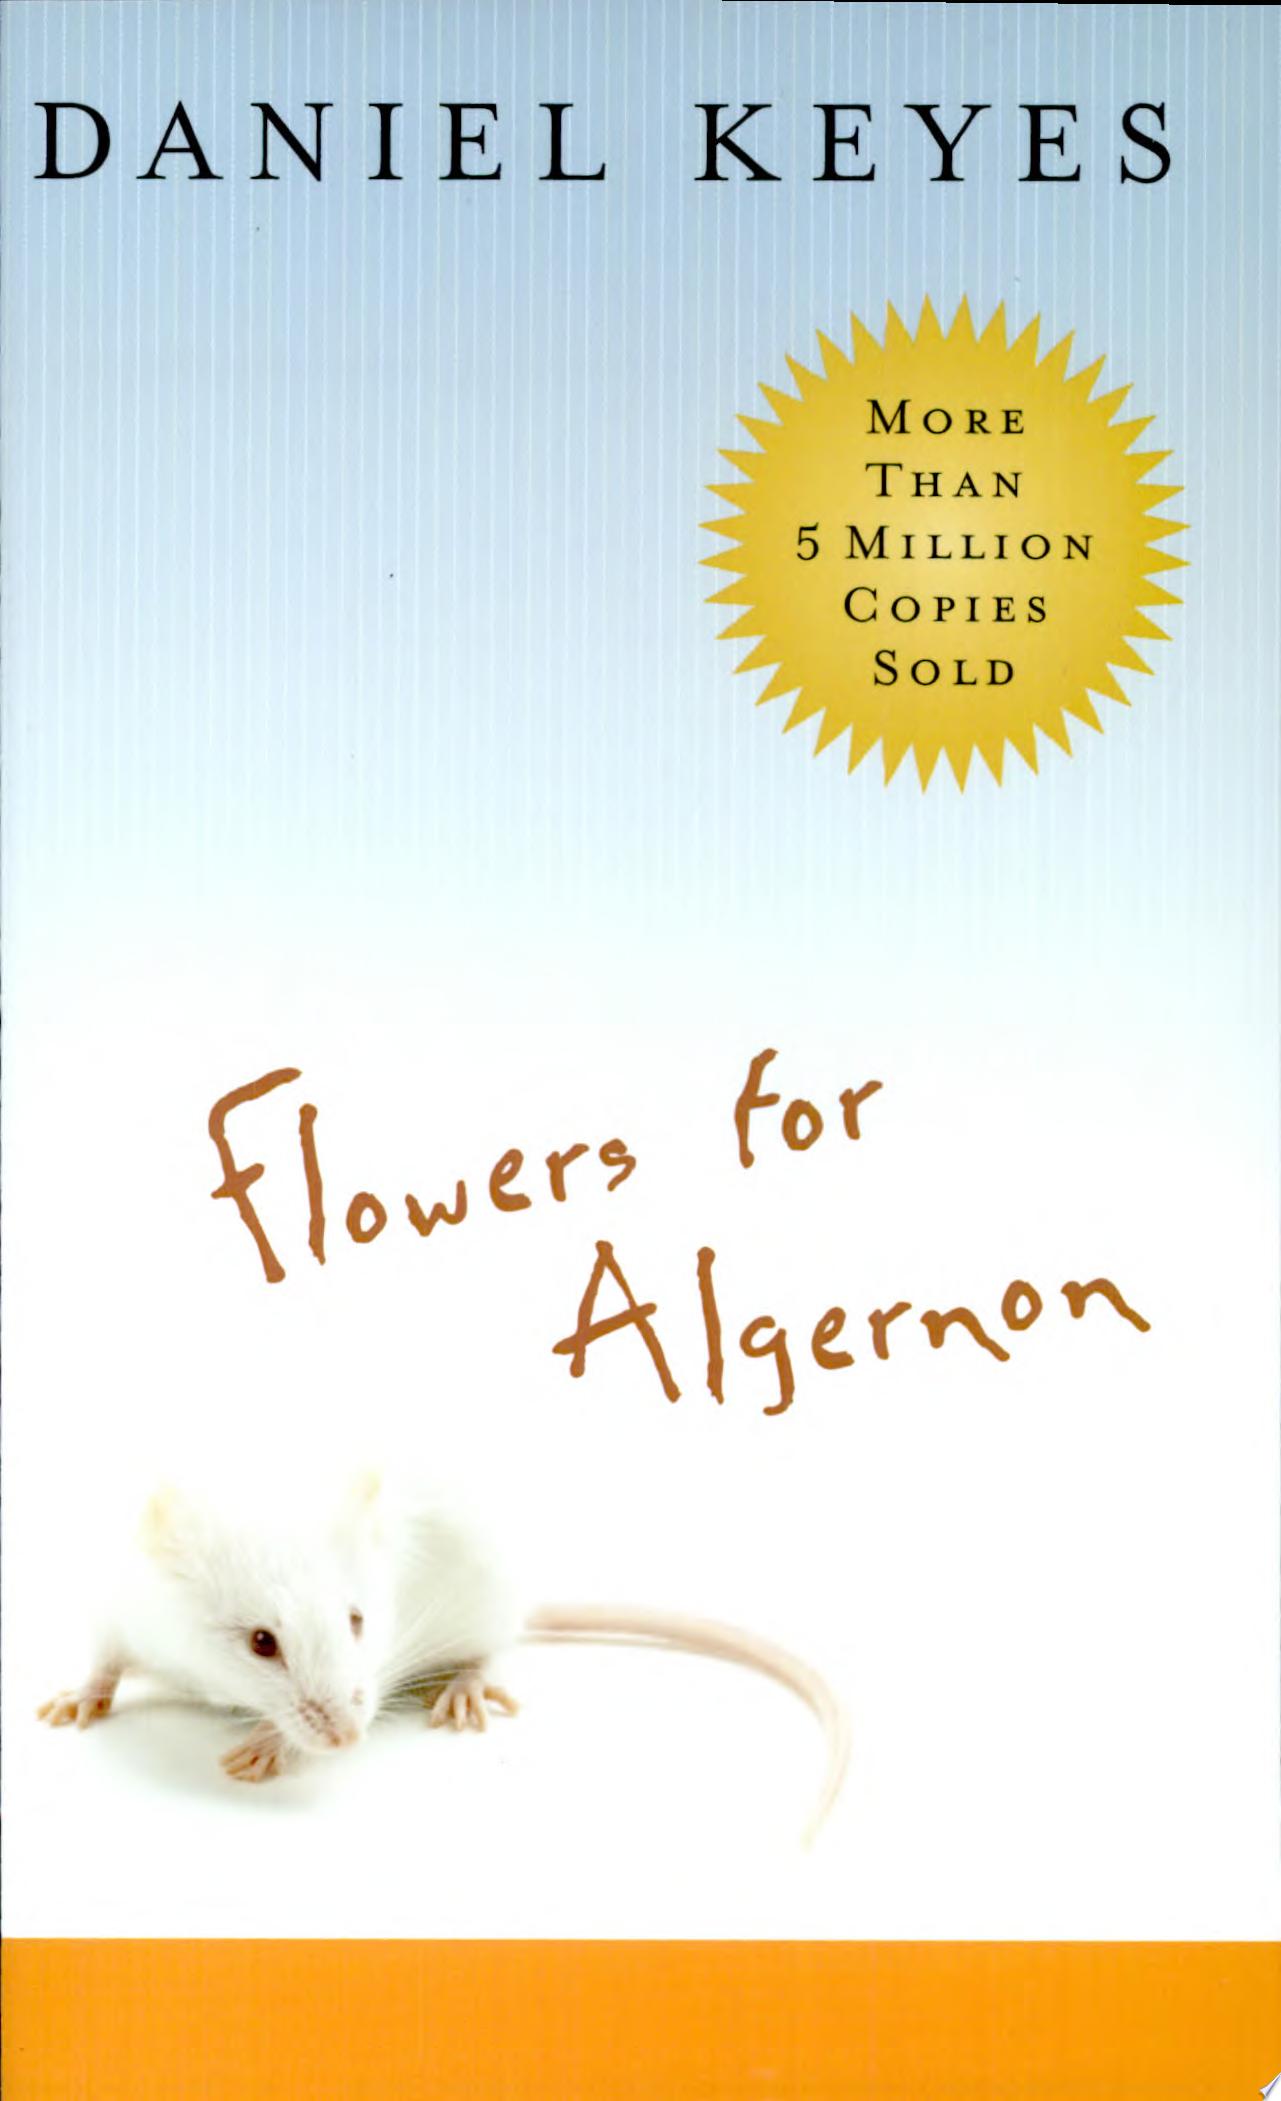 Image for "Flowers for Algernon"